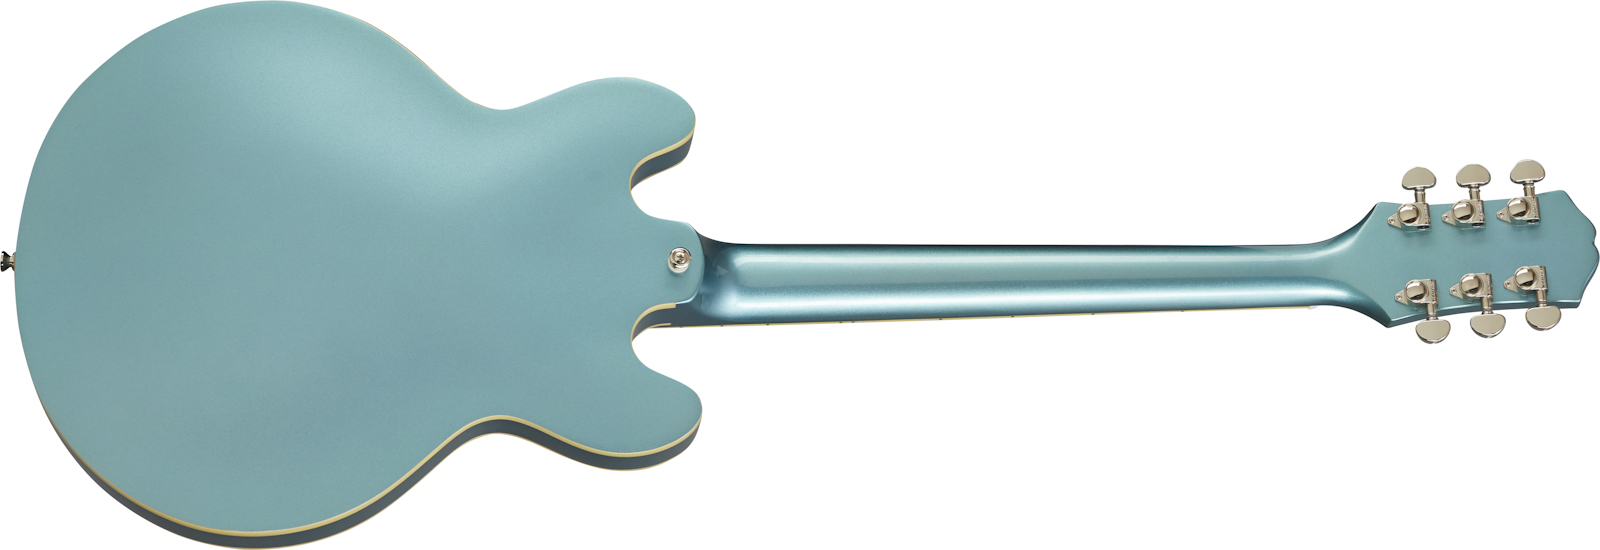 Epiphone Es-339 Inspired By Gibson 2020 2h Ht Rw - Pelham Blue - Semi hollow elektriche gitaar - Variation 1